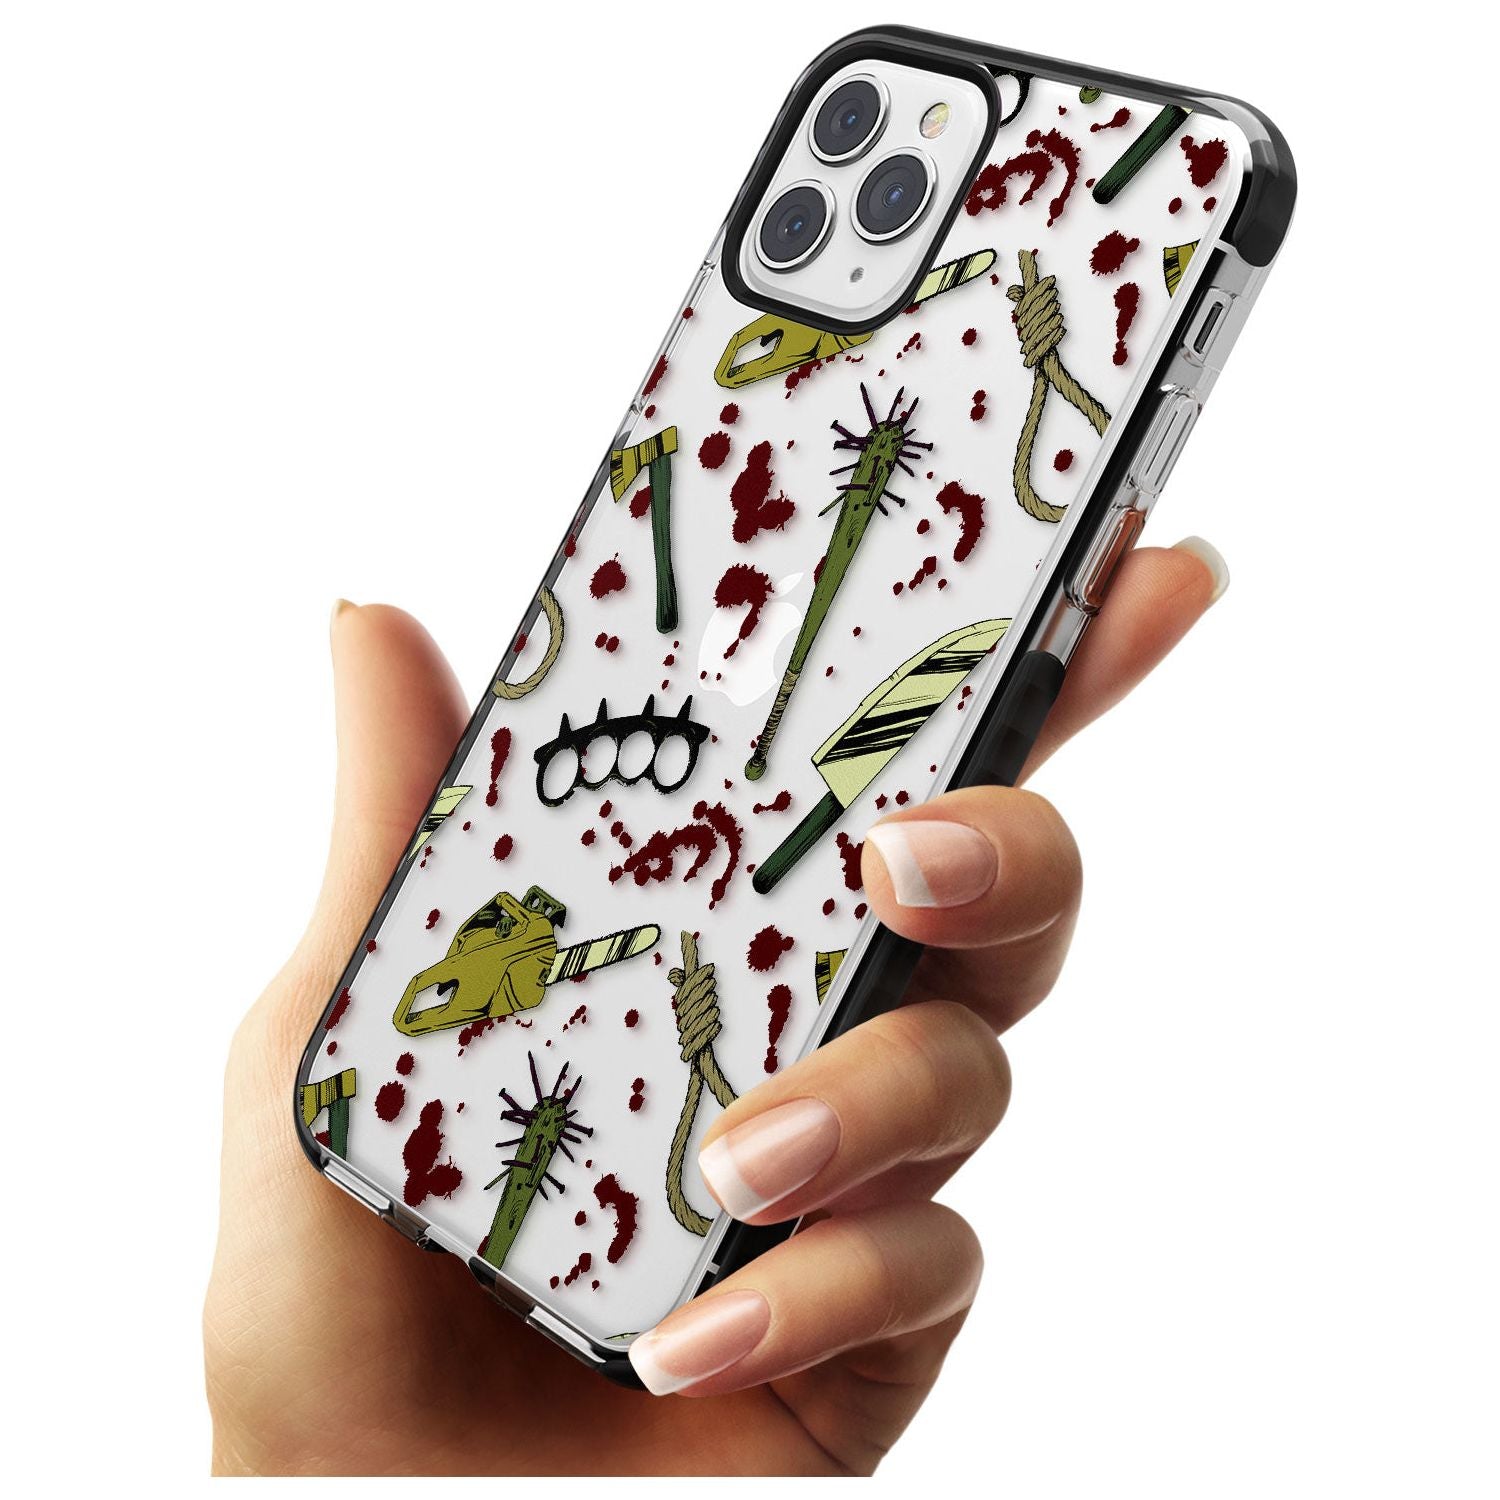 Movie Massacre Black Impact Phone Case for iPhone 11